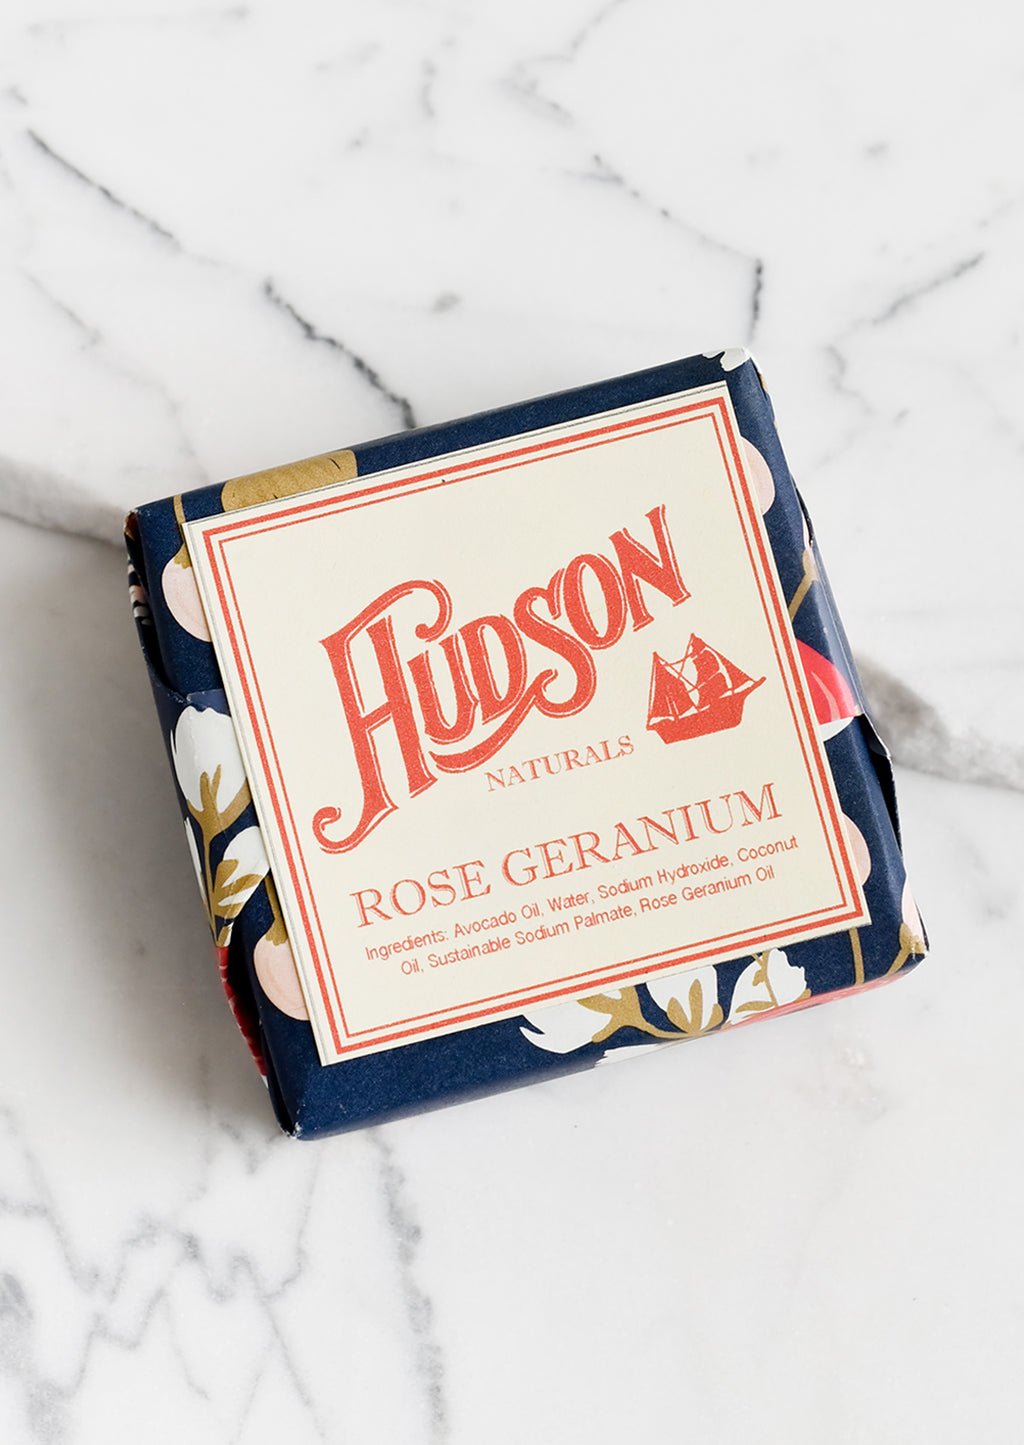 Rose Geranium: A square bar of soap in botanical printed packaging in Rose Geranium scent.